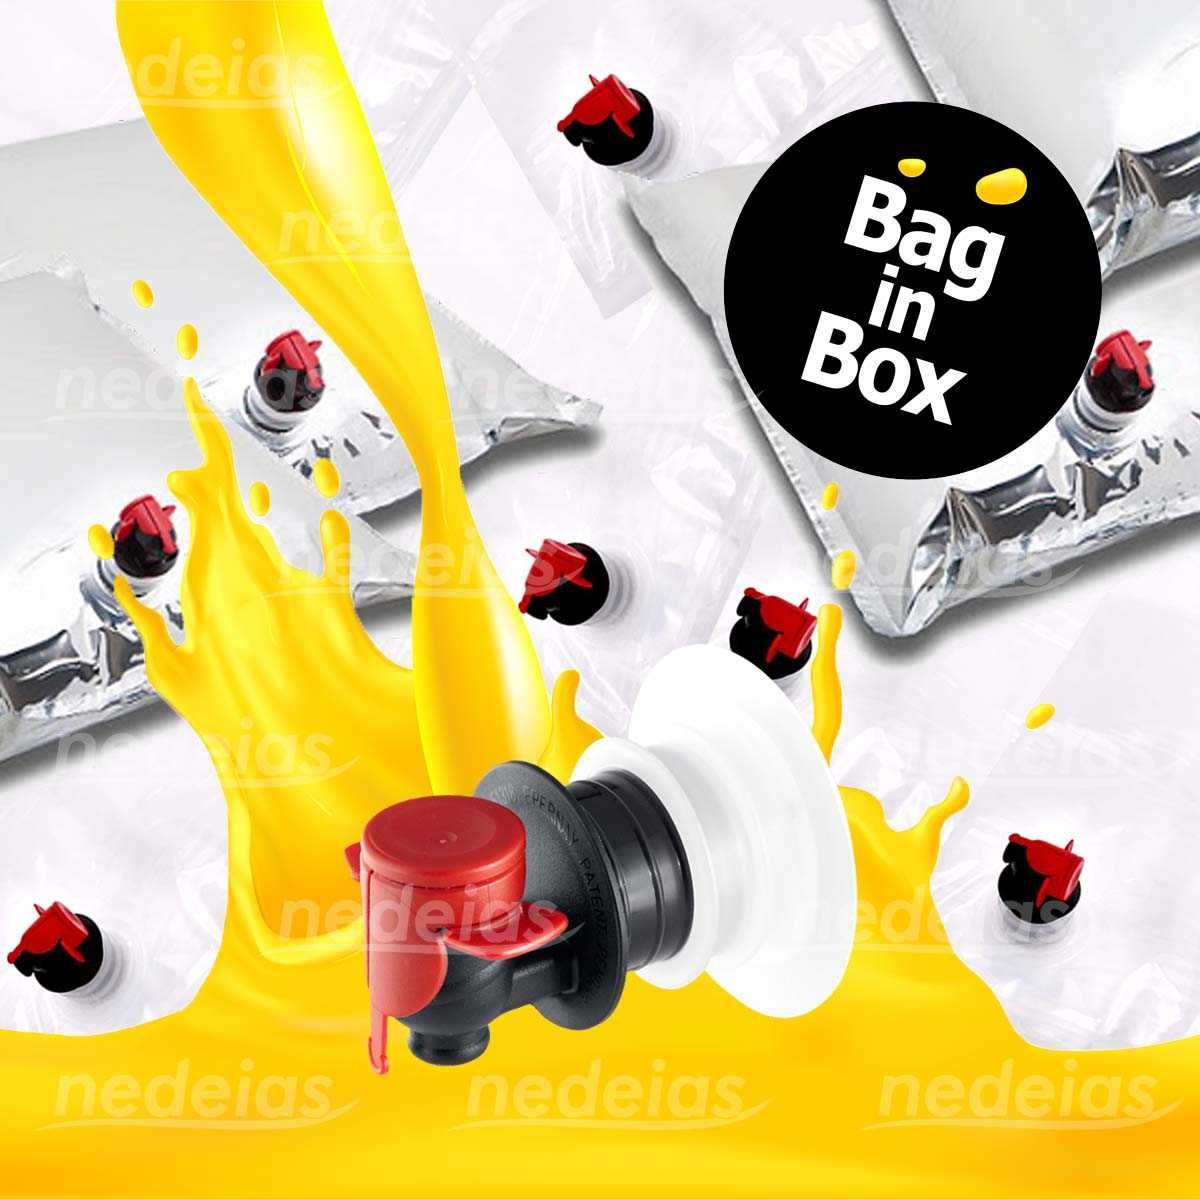 Punga Bag in Box (BIB) transparentă/metalizată  3L - ORIGINAL VITOP